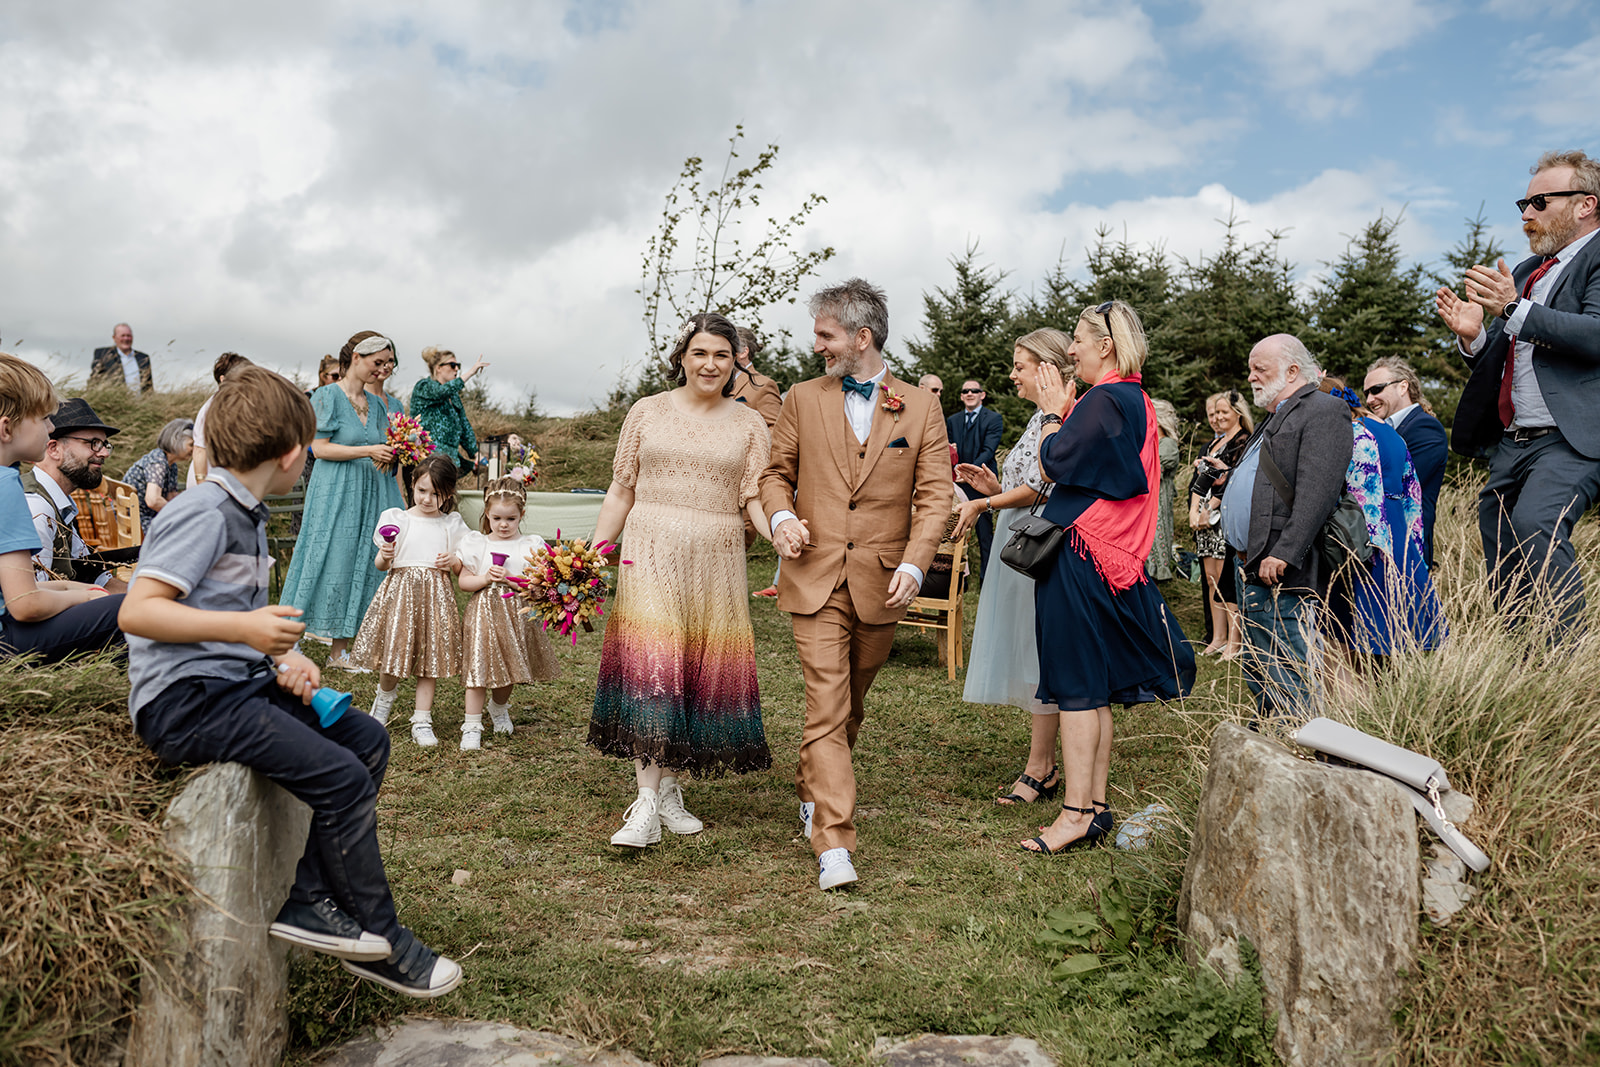 Festival wedding Ireland, West Cork, Camus Farm, Sarah Kate photography, outdoor wedding venue 